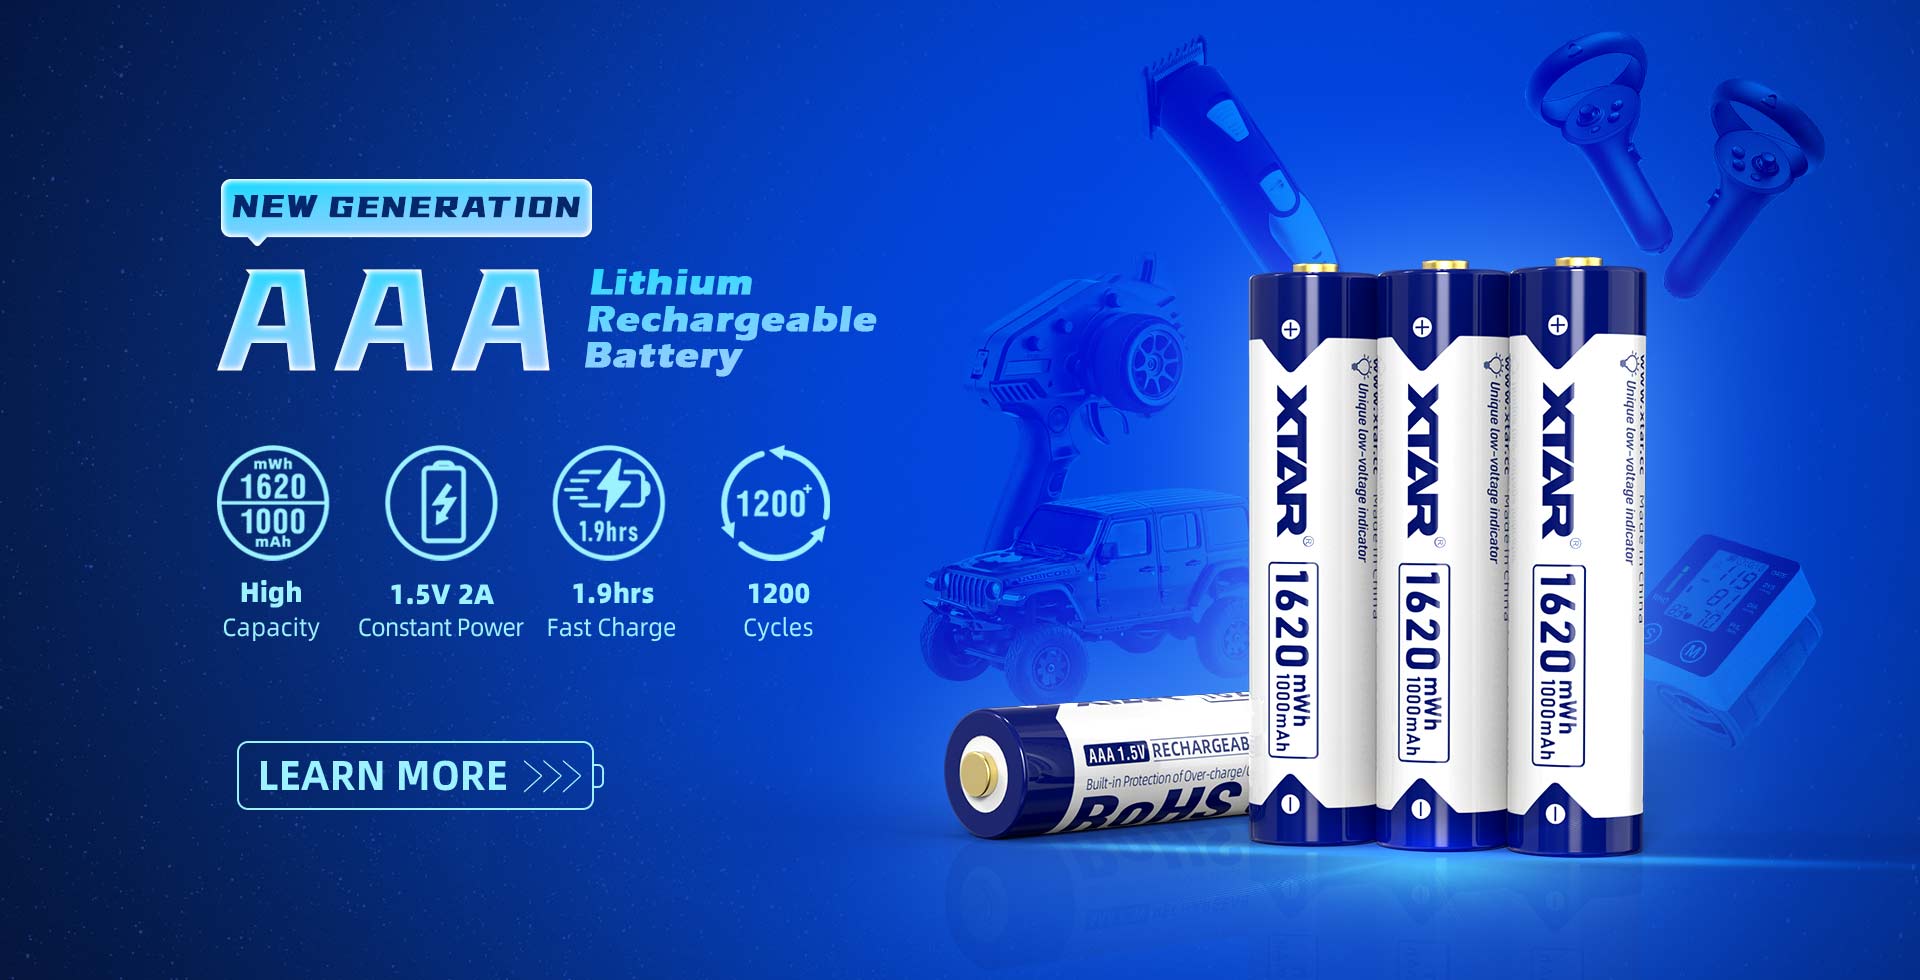 XTAR AAA Lithium 1620mWh Battery.jpg